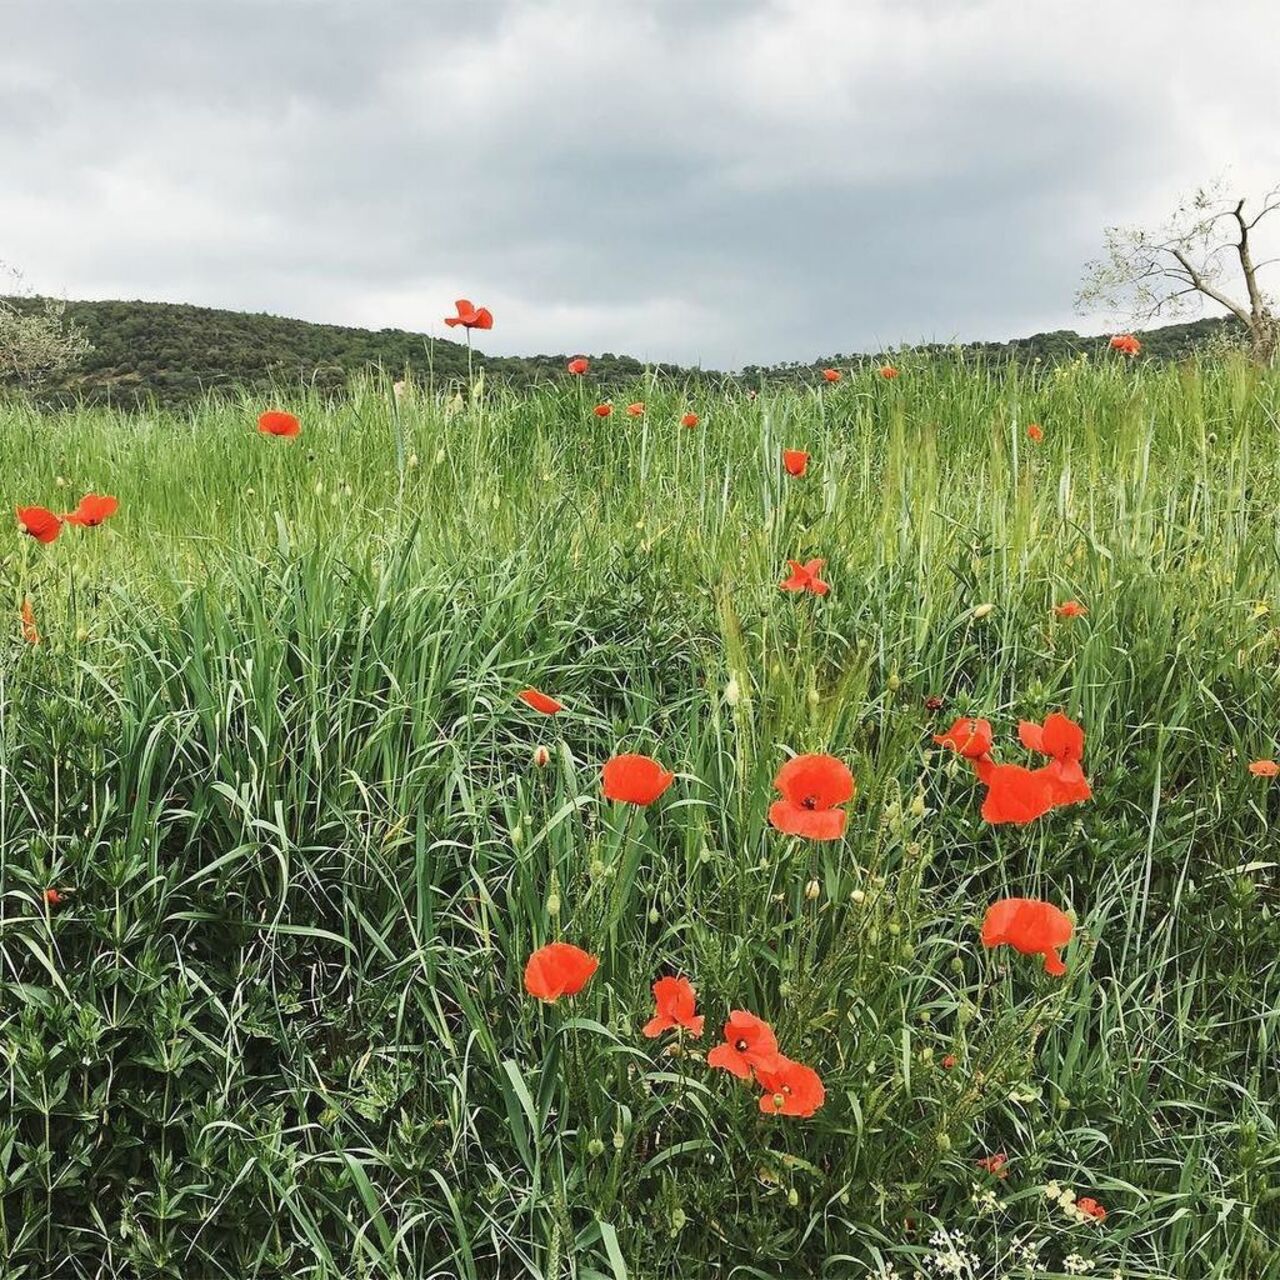 In Tuscany, red poppies grow like weeds. They're EVERYWHERE. ❤️ #Italy #Tuscany #mytinyatlas http://ift.tt/2oJeysY https://t.co/ikSkOk0cKE